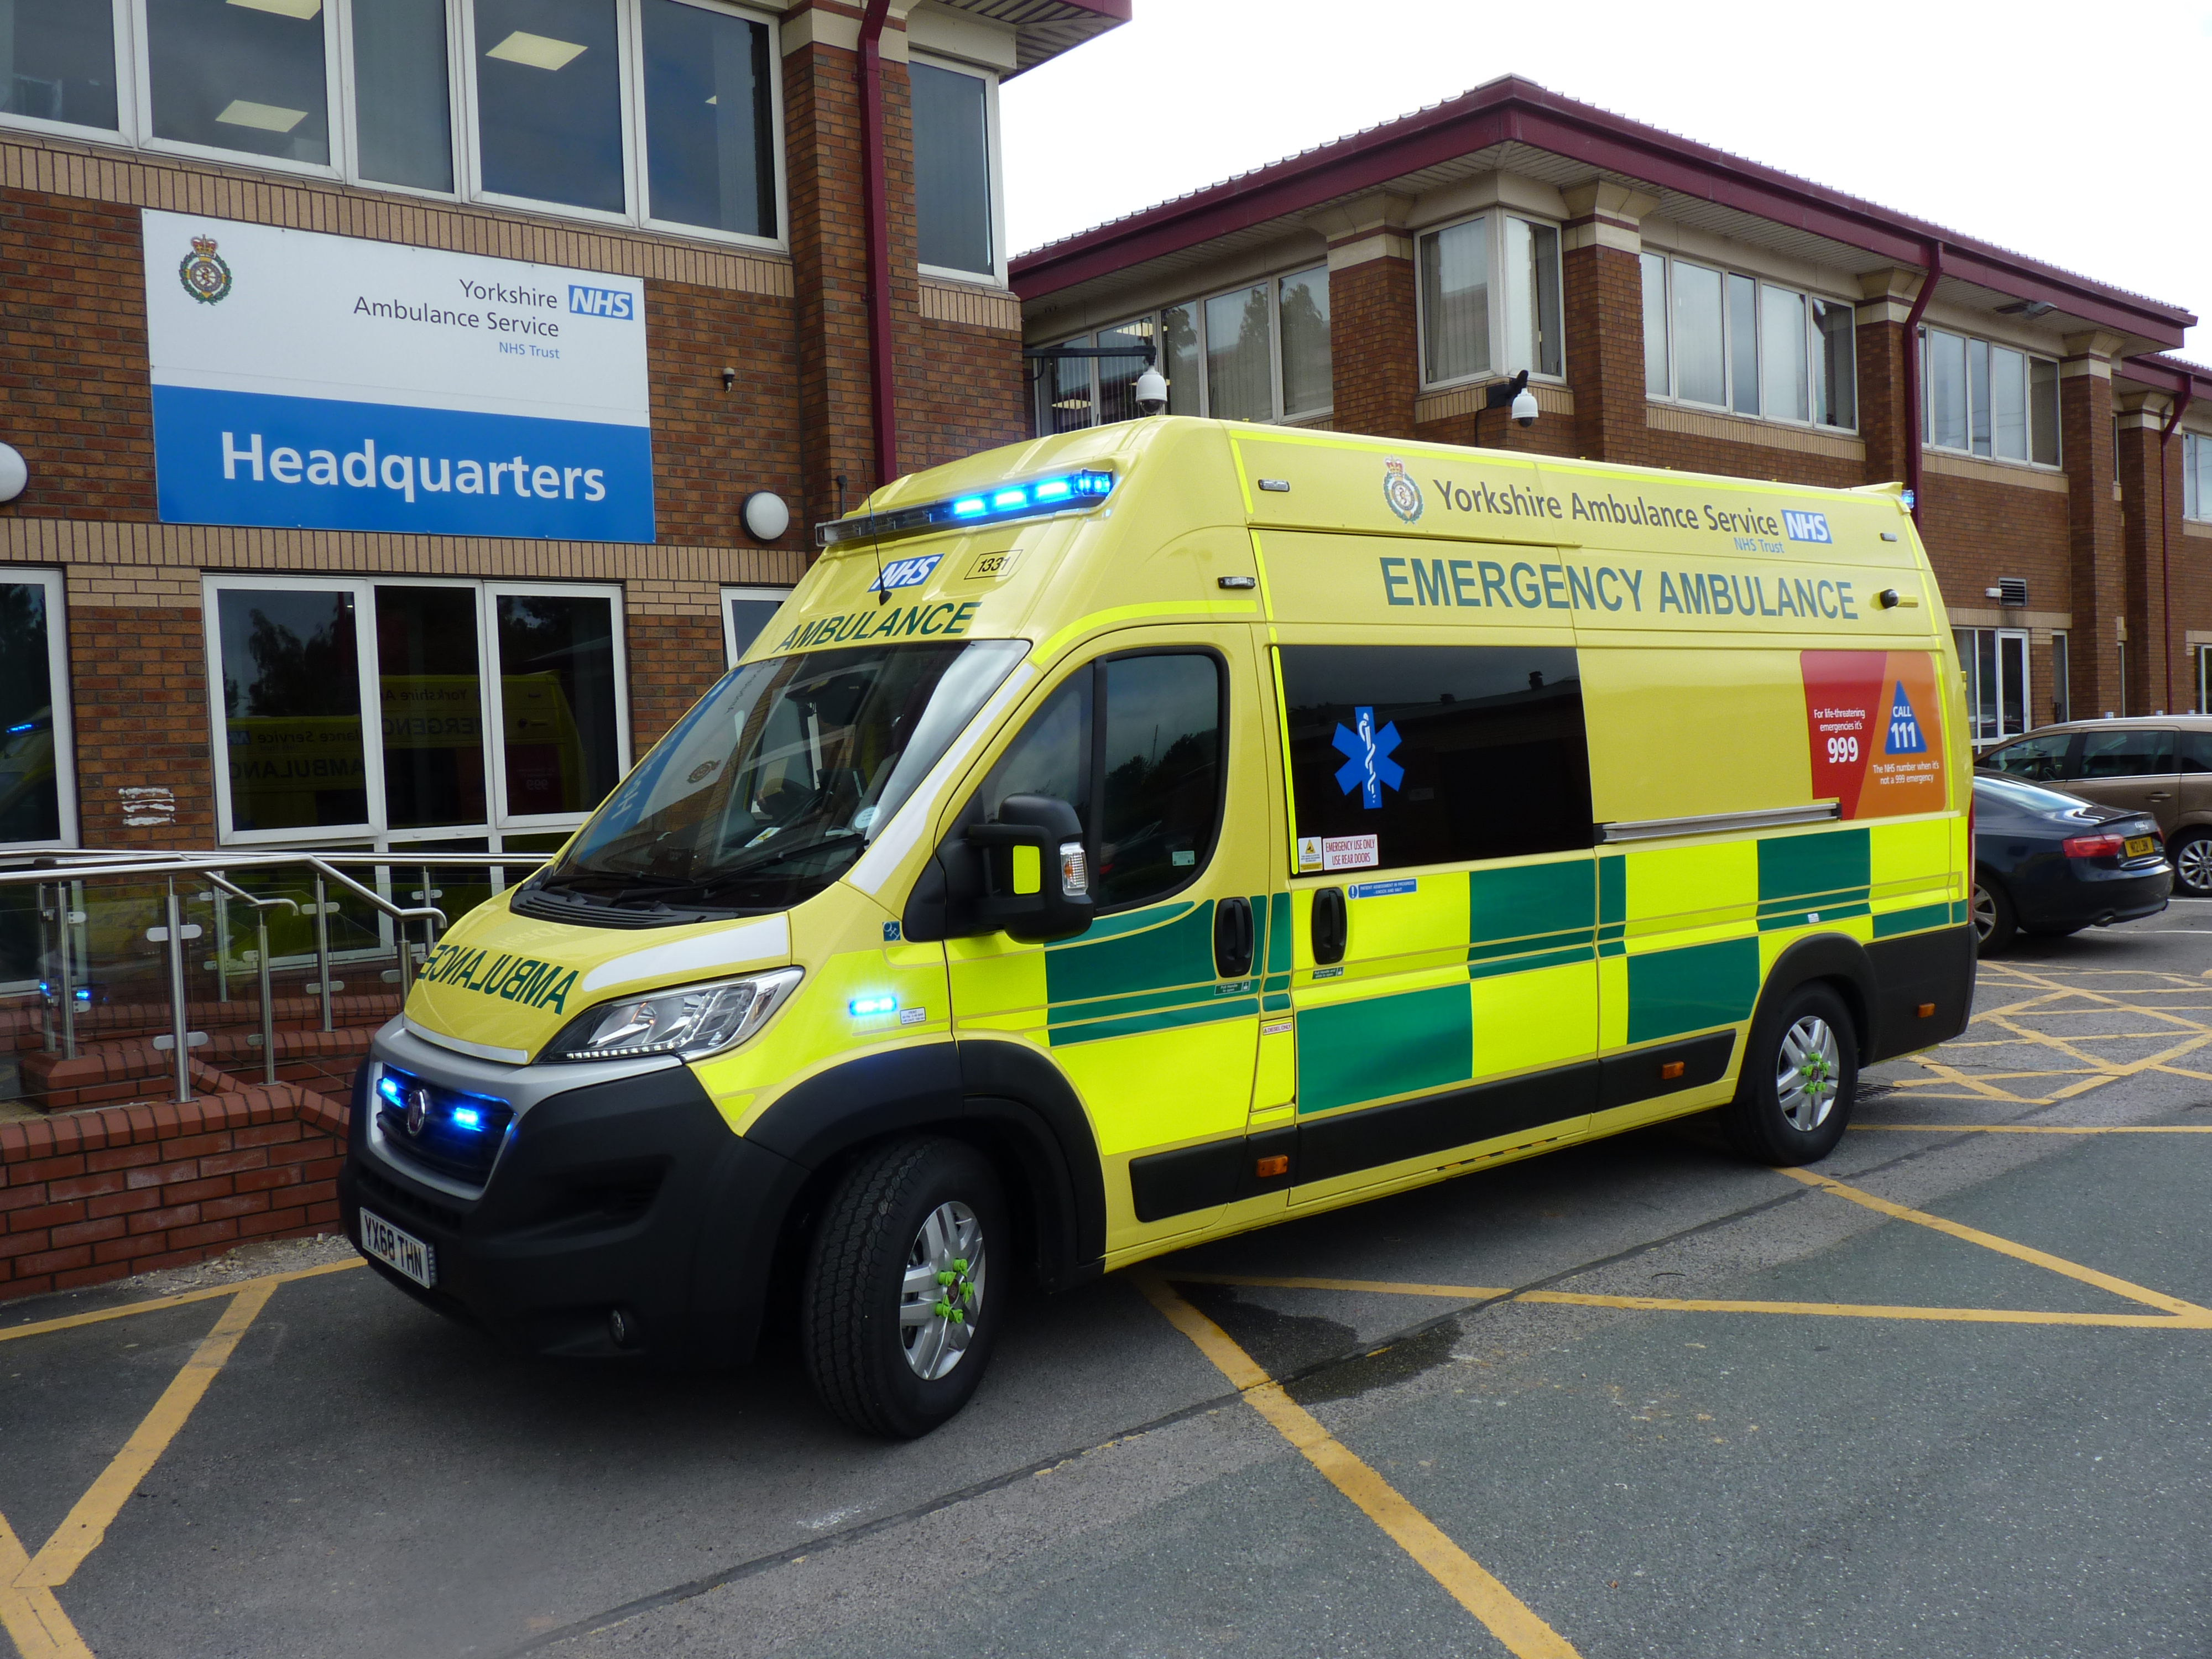 Emergency ambulance parked outside of Yorkshire Ambulance Service HQ.